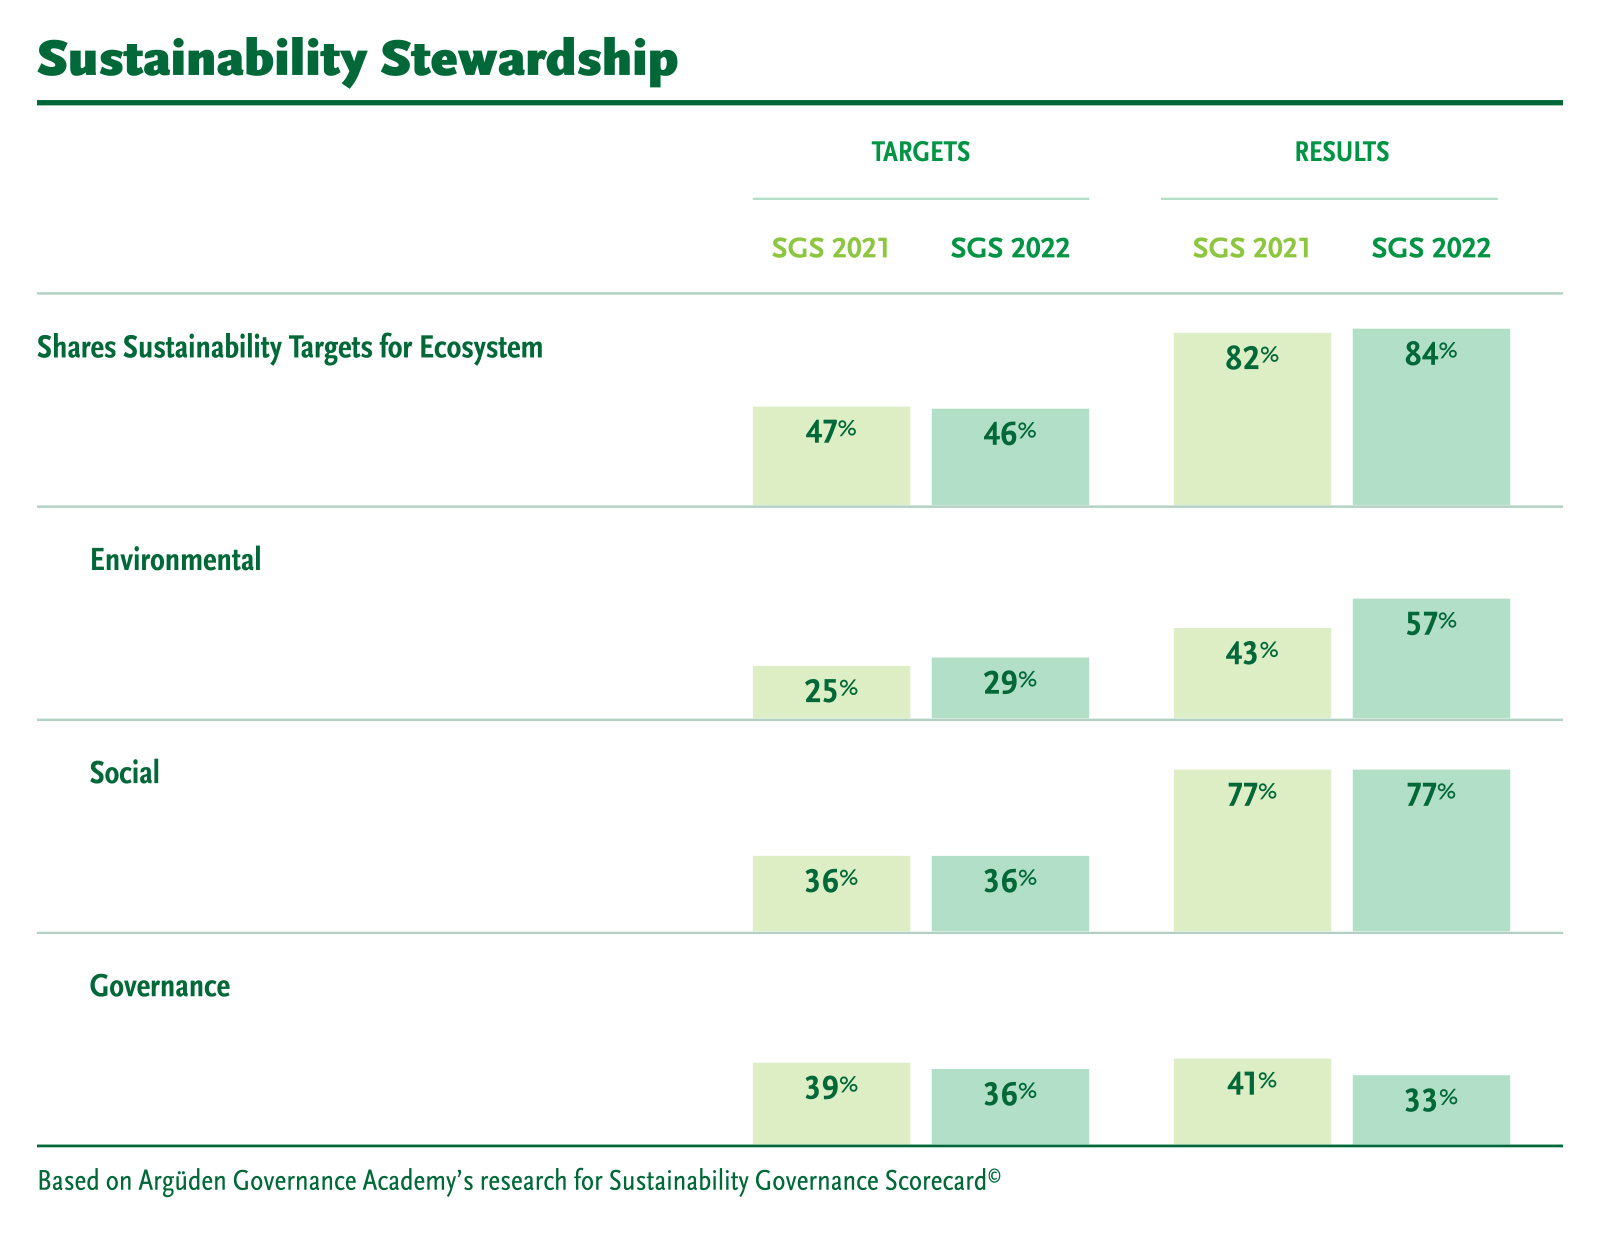 SGS 2022 Sustainability Stewardship